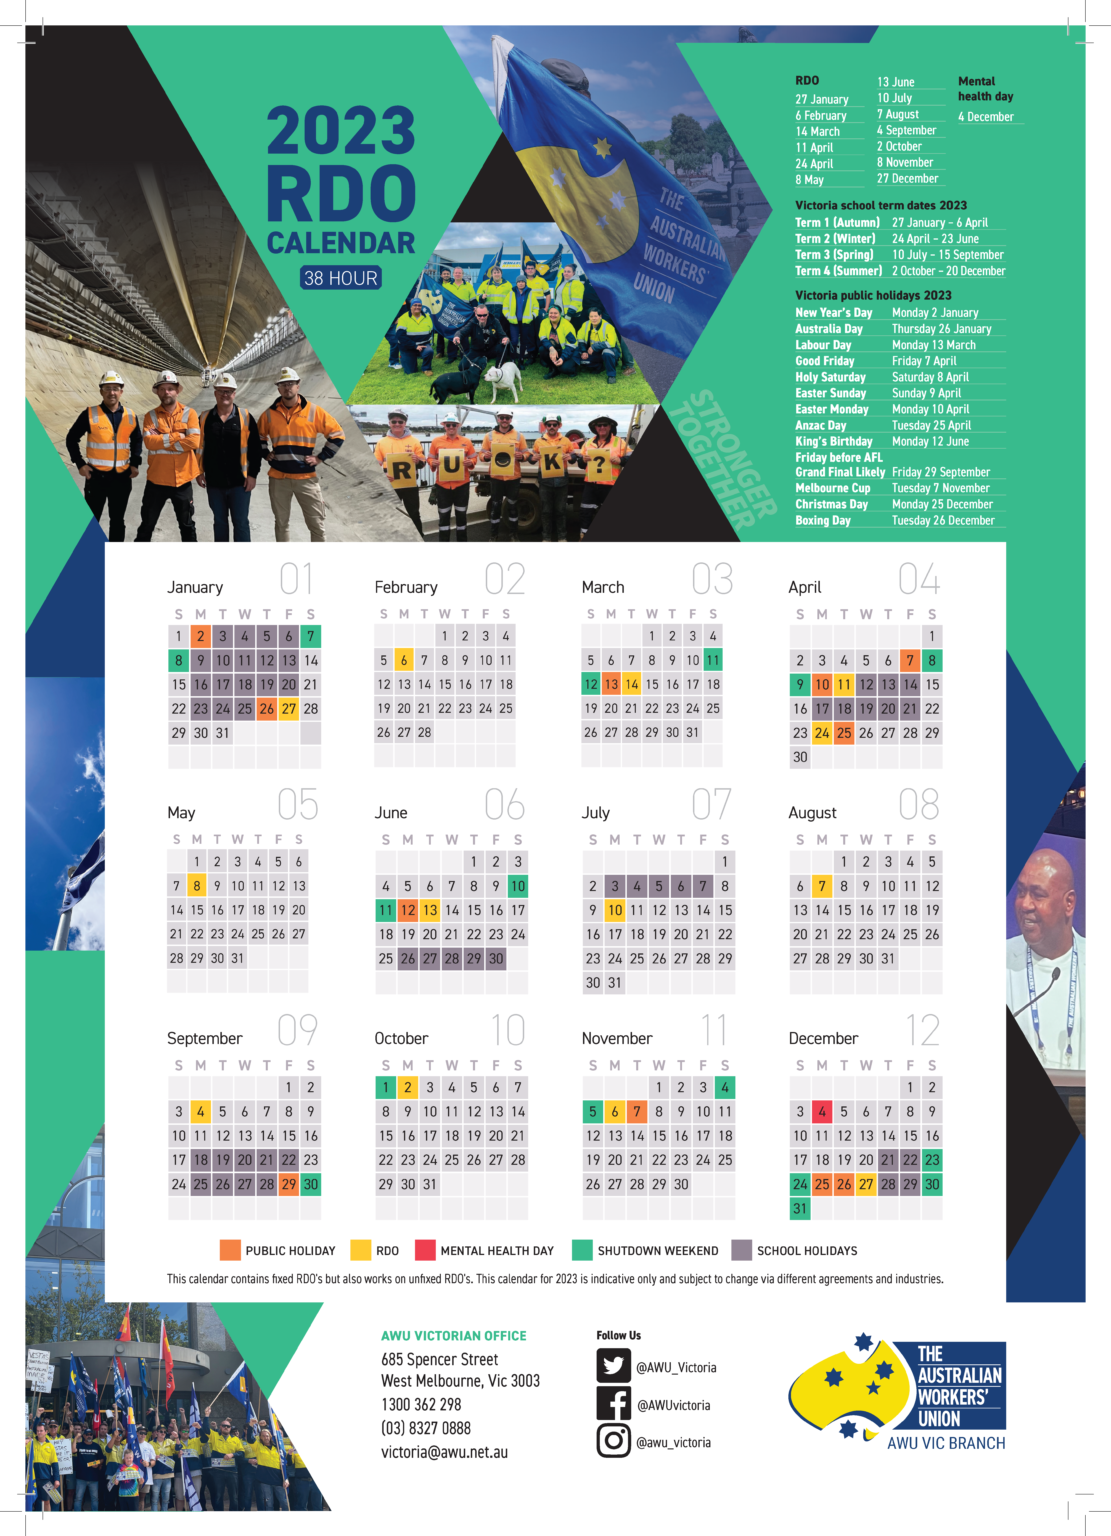 AWU VICTORIA : RDO Calendars 2023 - The Australian Workers' Union : The ...